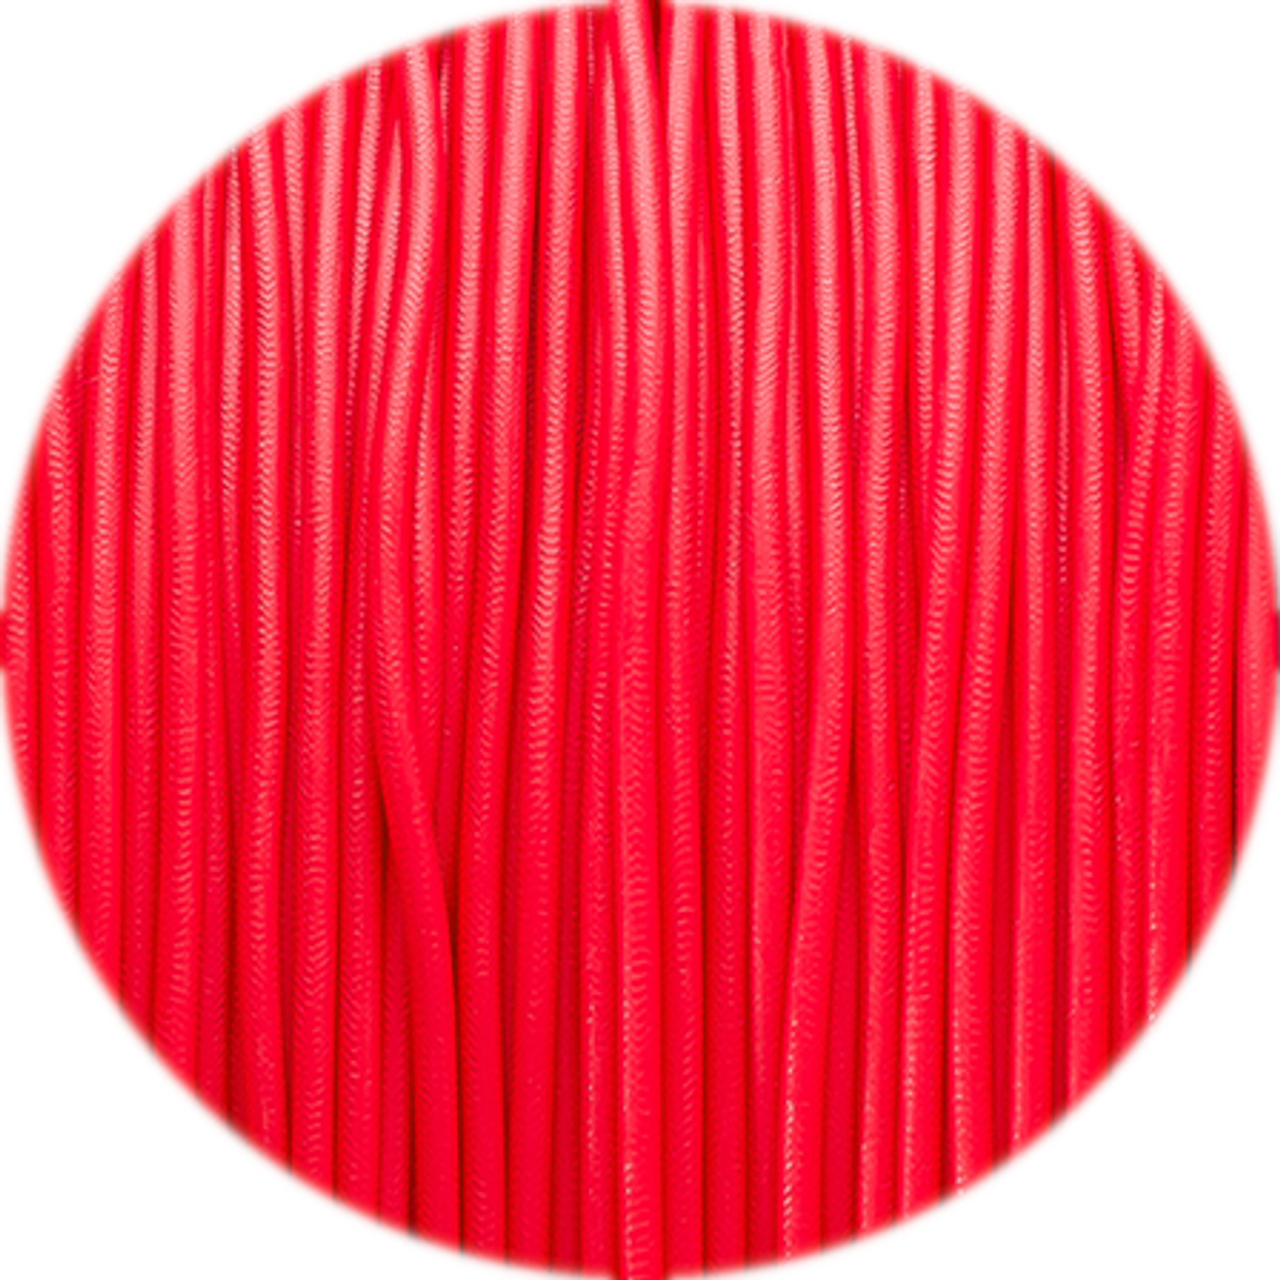 Fiberlogy Fiberflex 30D Red 3D Printing Filament